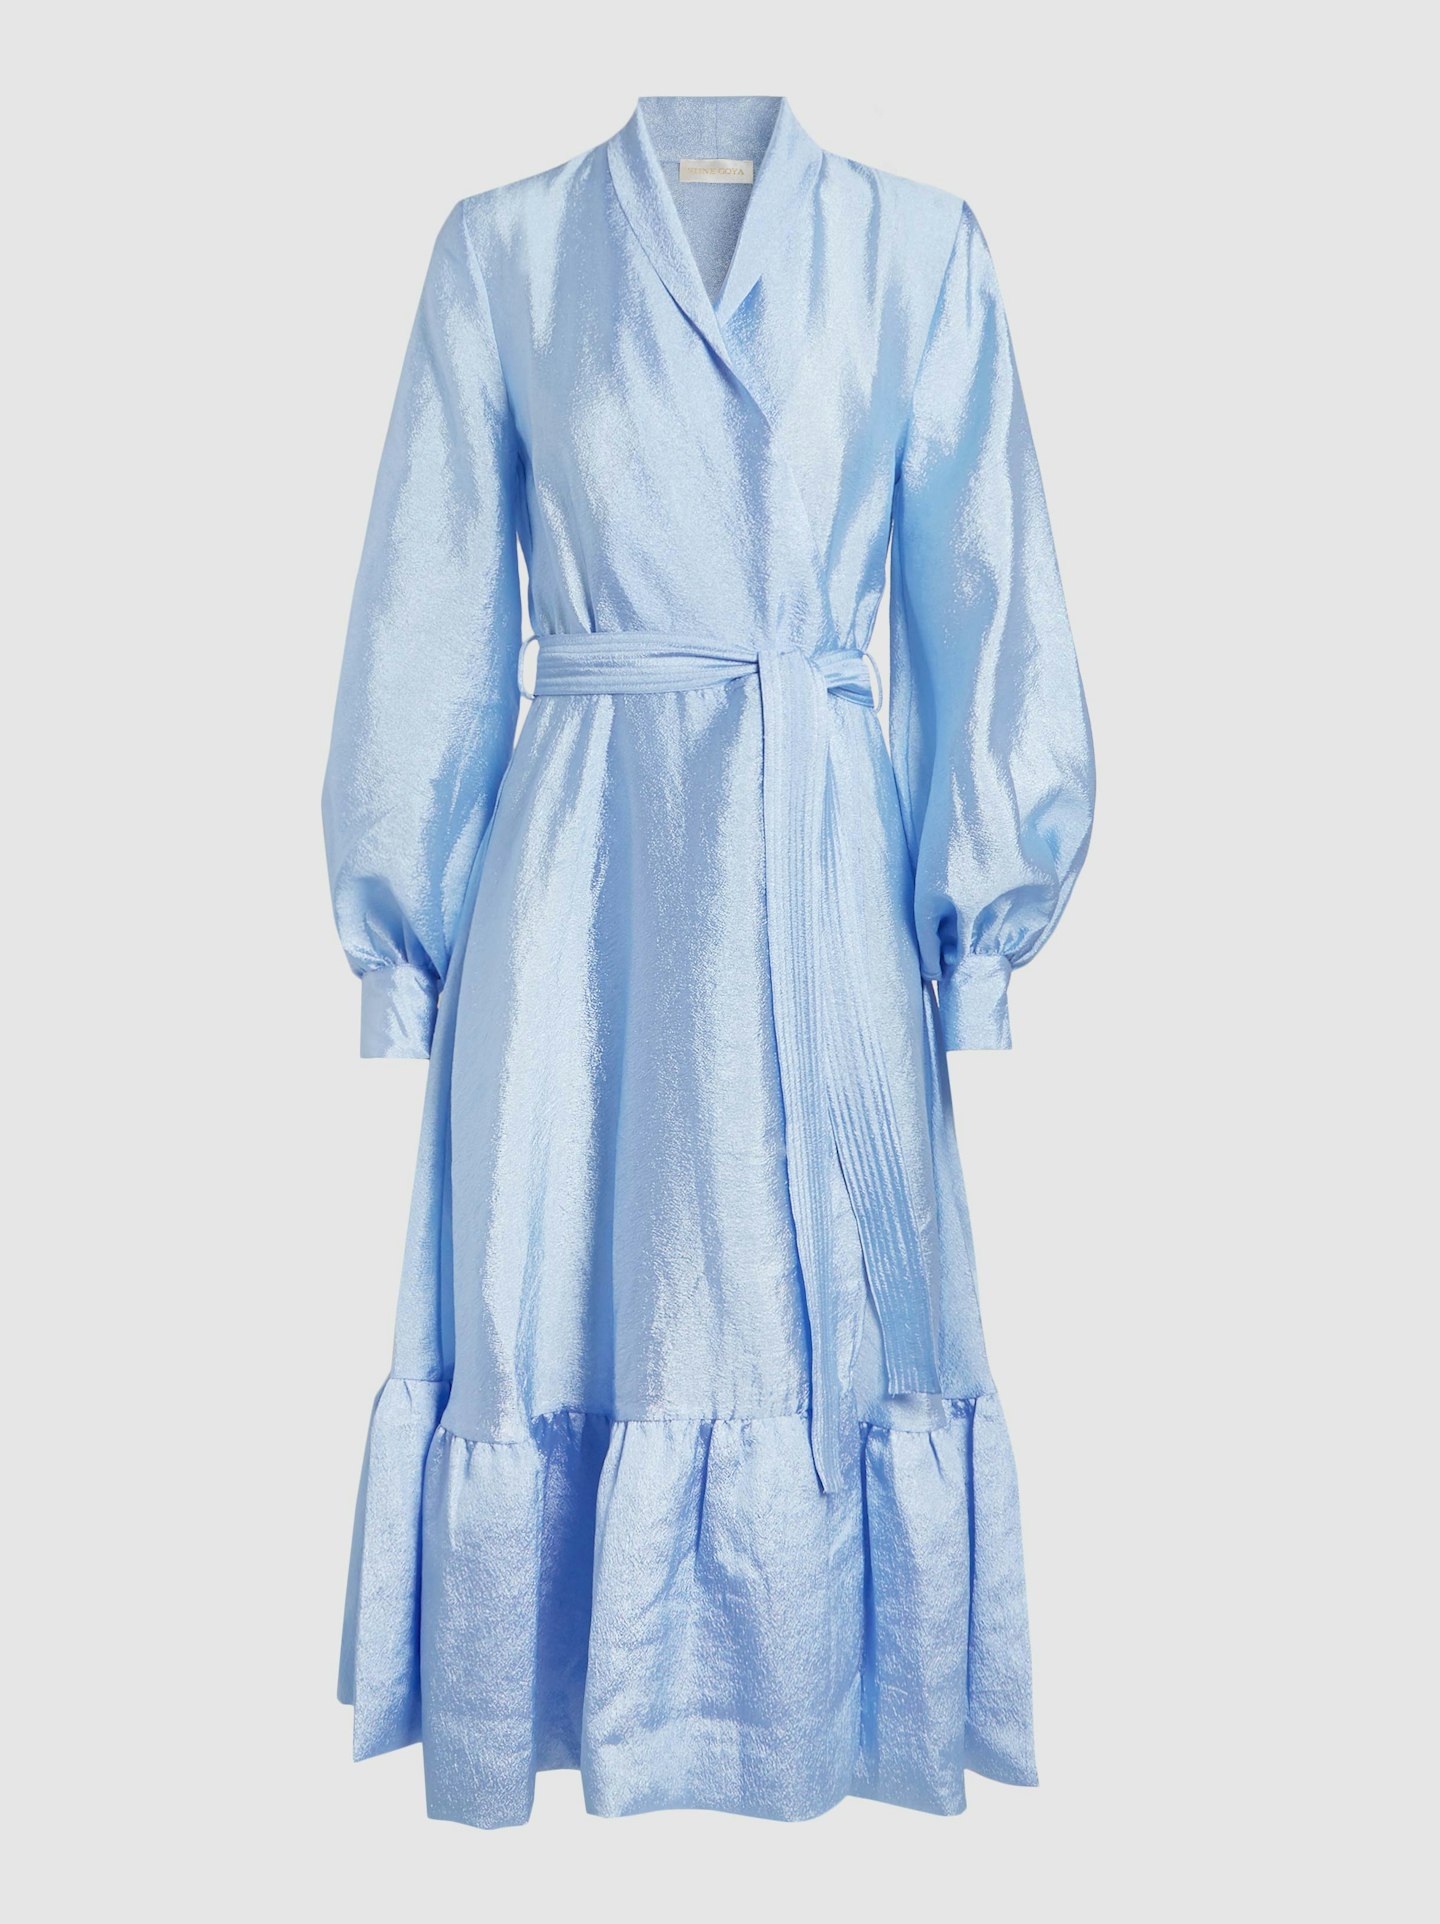 Stine Goya, Bubble Hem Satin Wrap Dress, £175